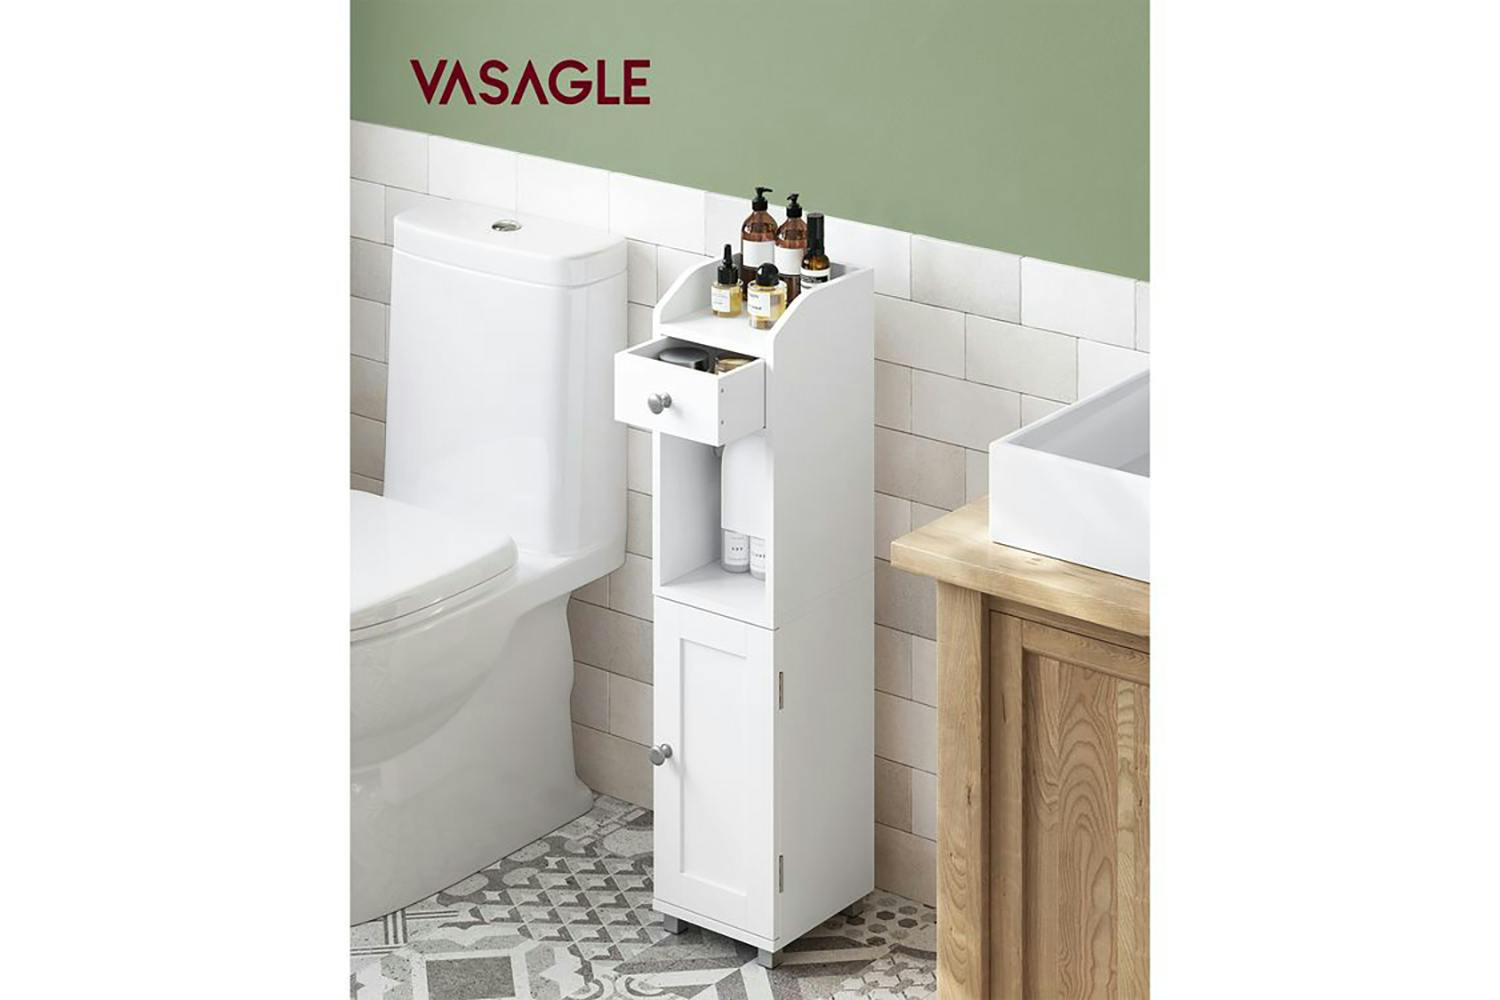 VASAGLE Small Bathroom Storage Cabinet, Toilet Paper Holder with Storage,  Toilet Paper Storage Cabinet, Bathroom Organizer with Adjustable Shelf,  Water-Proof Feet